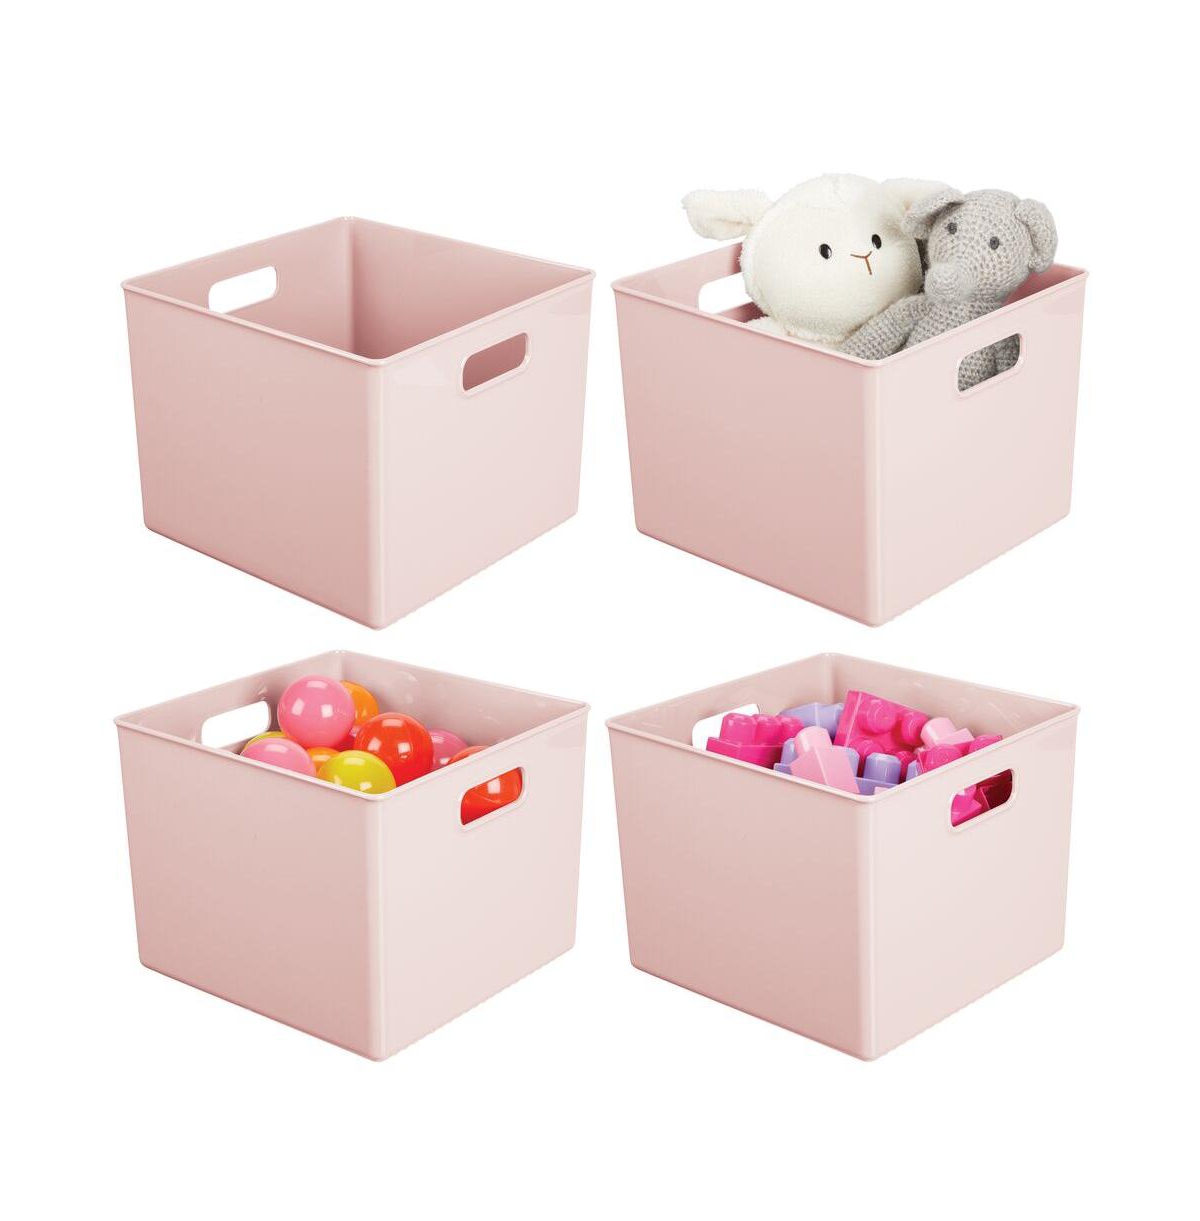 Plastic Deep Home Storage Organizer Bin with Handles, 4 Pack, Light Pink - Light pink